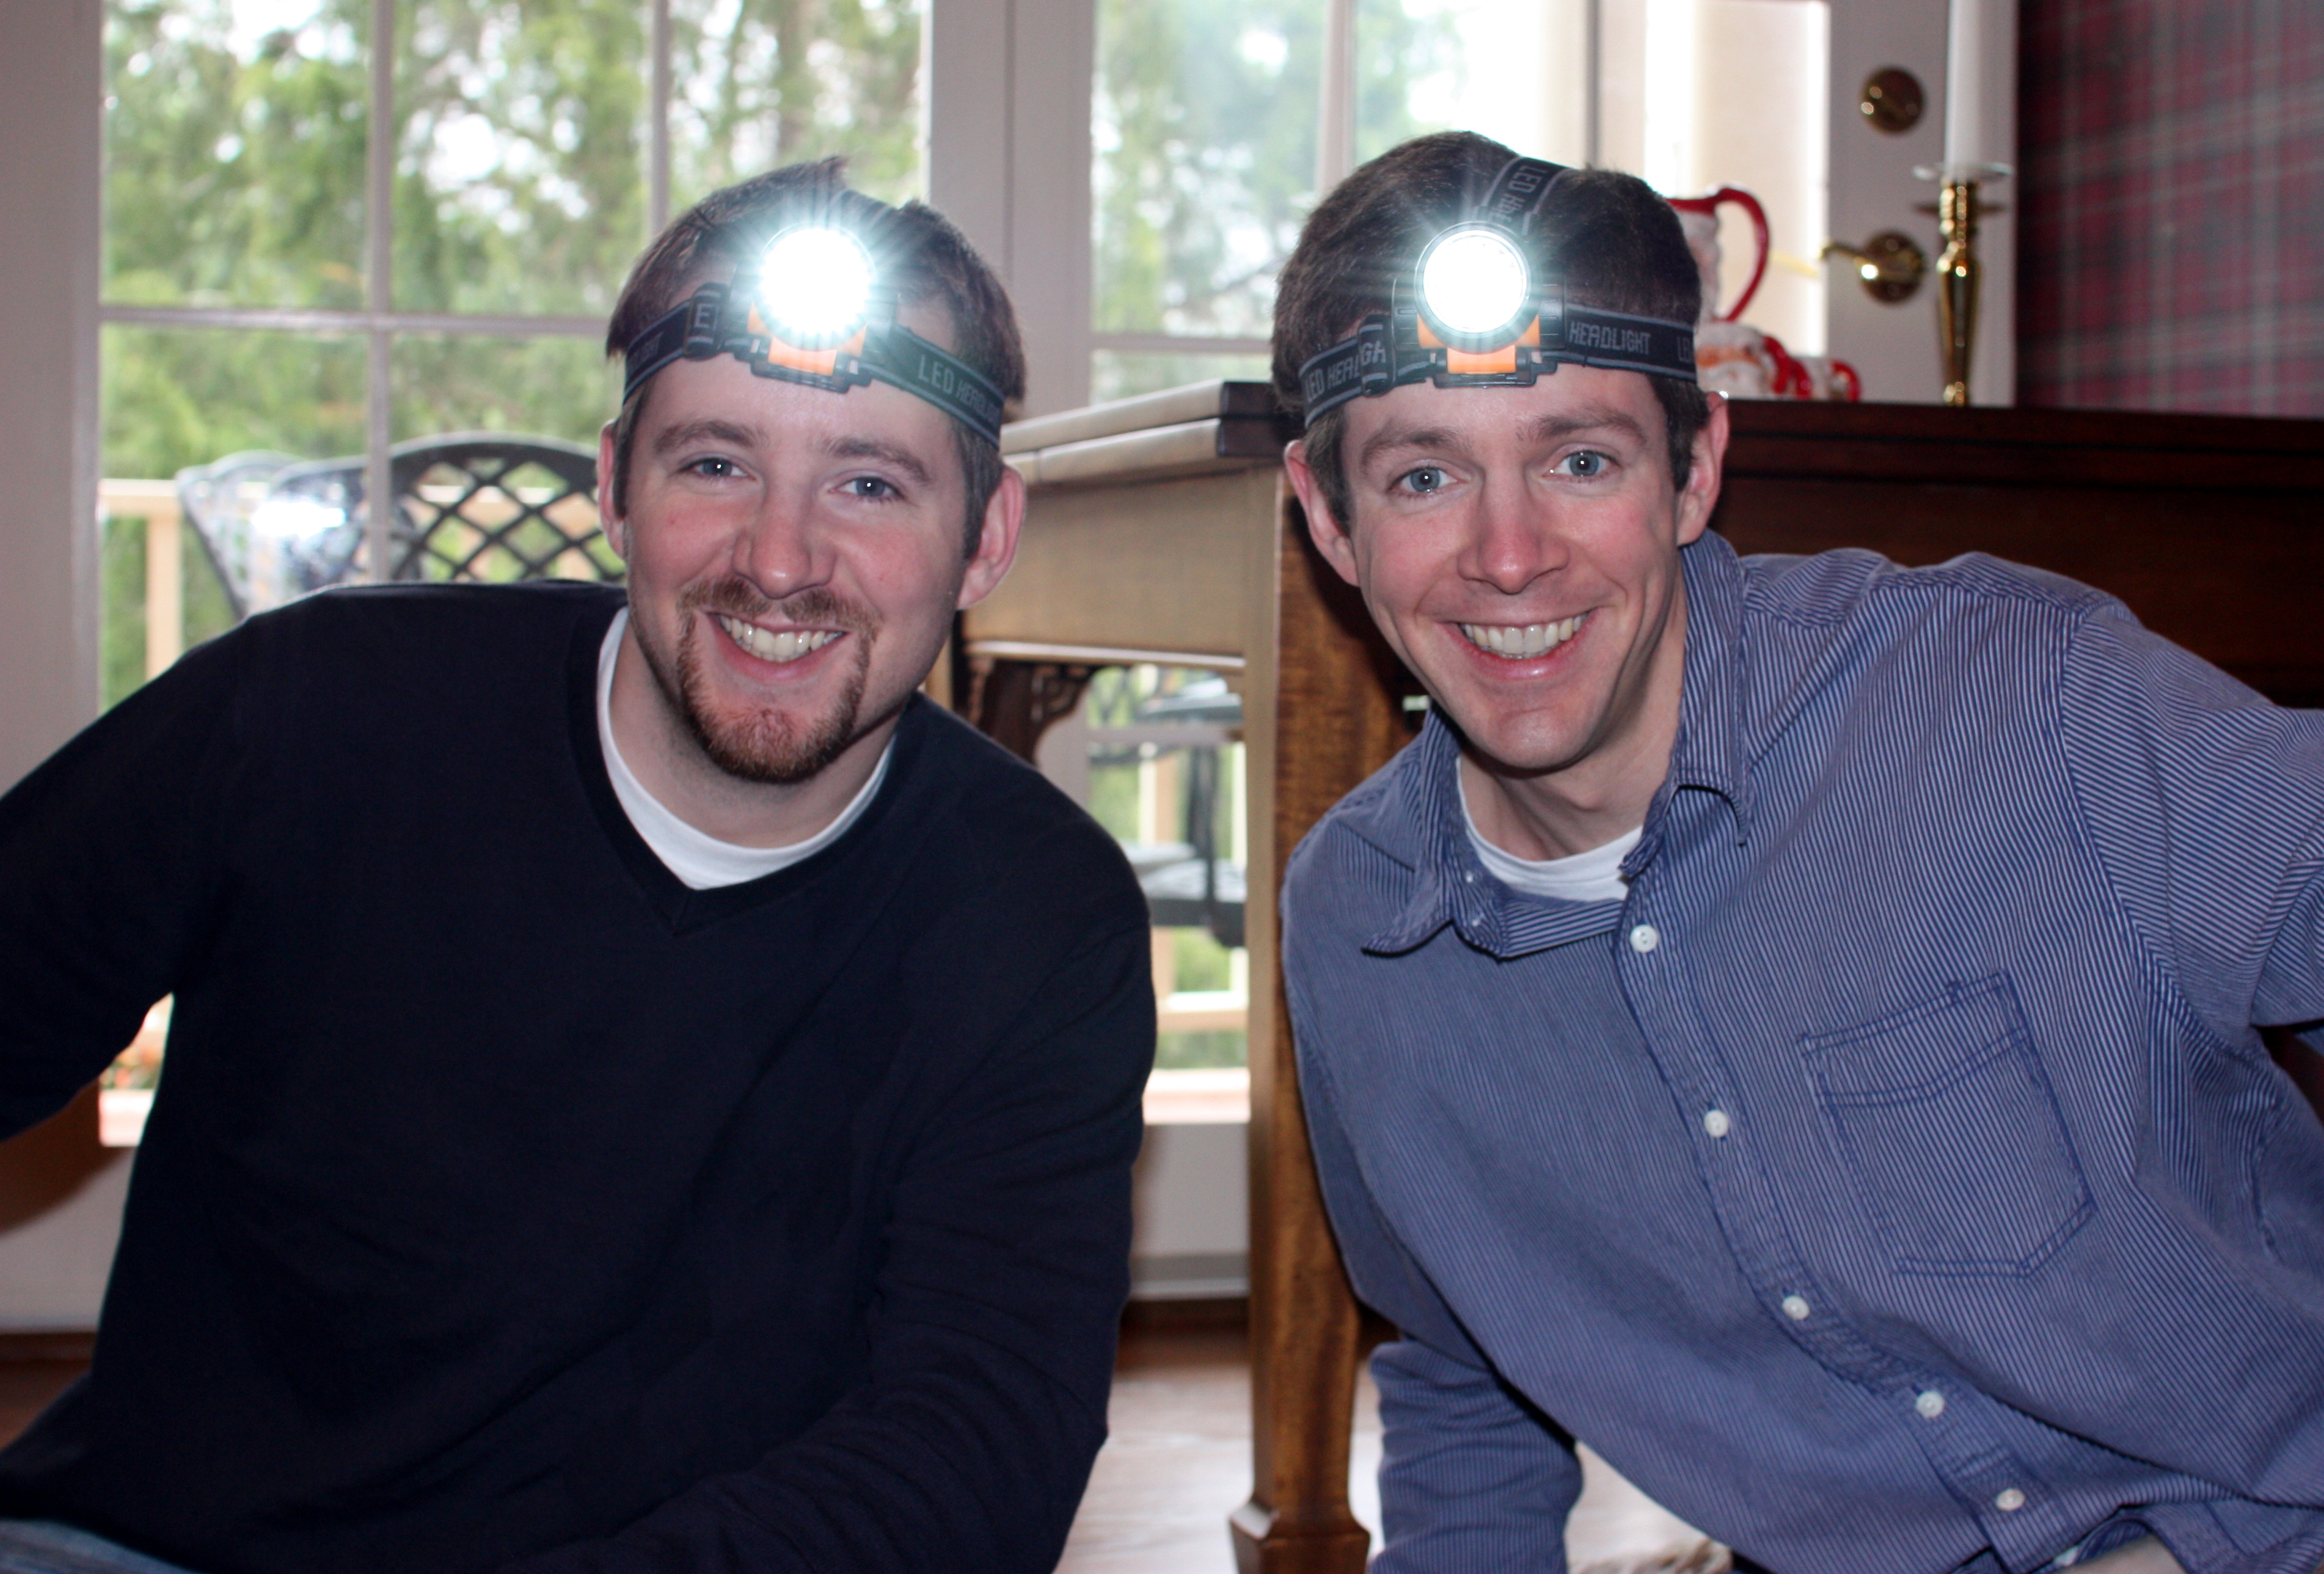 Hampton and Me Wearing Headlamps